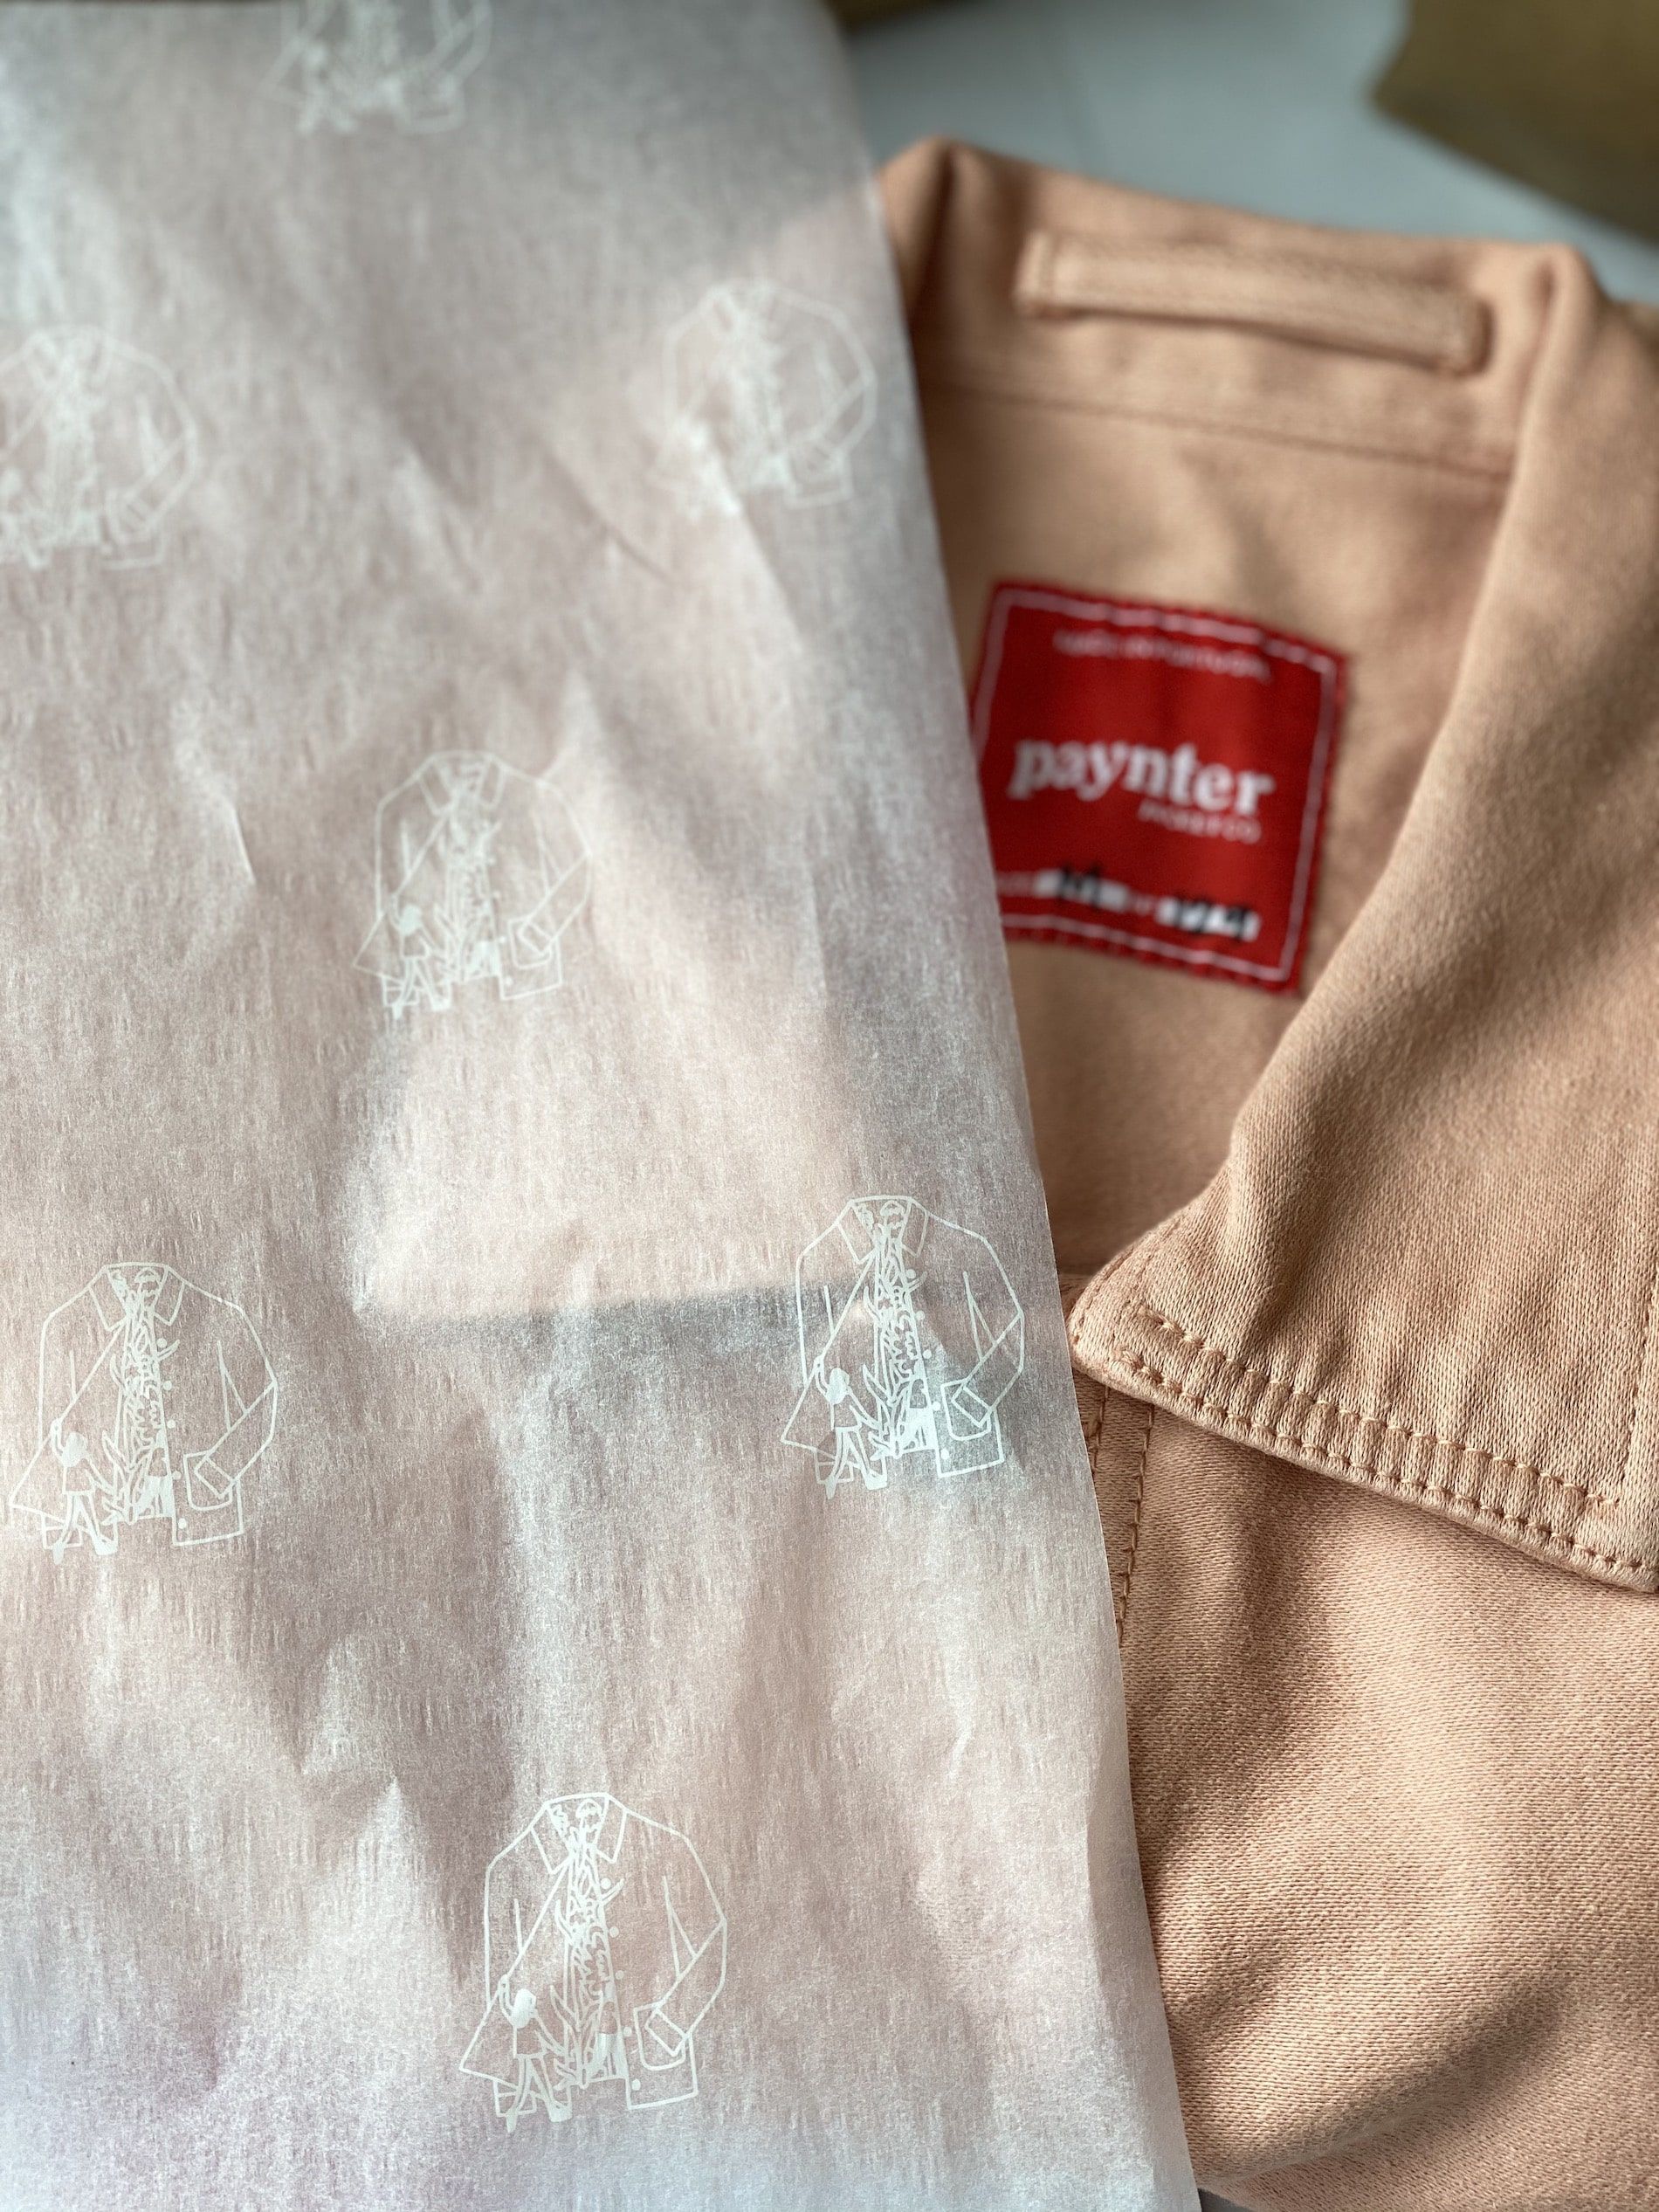 Paynter Jacket: Iconic Styles Reimagined